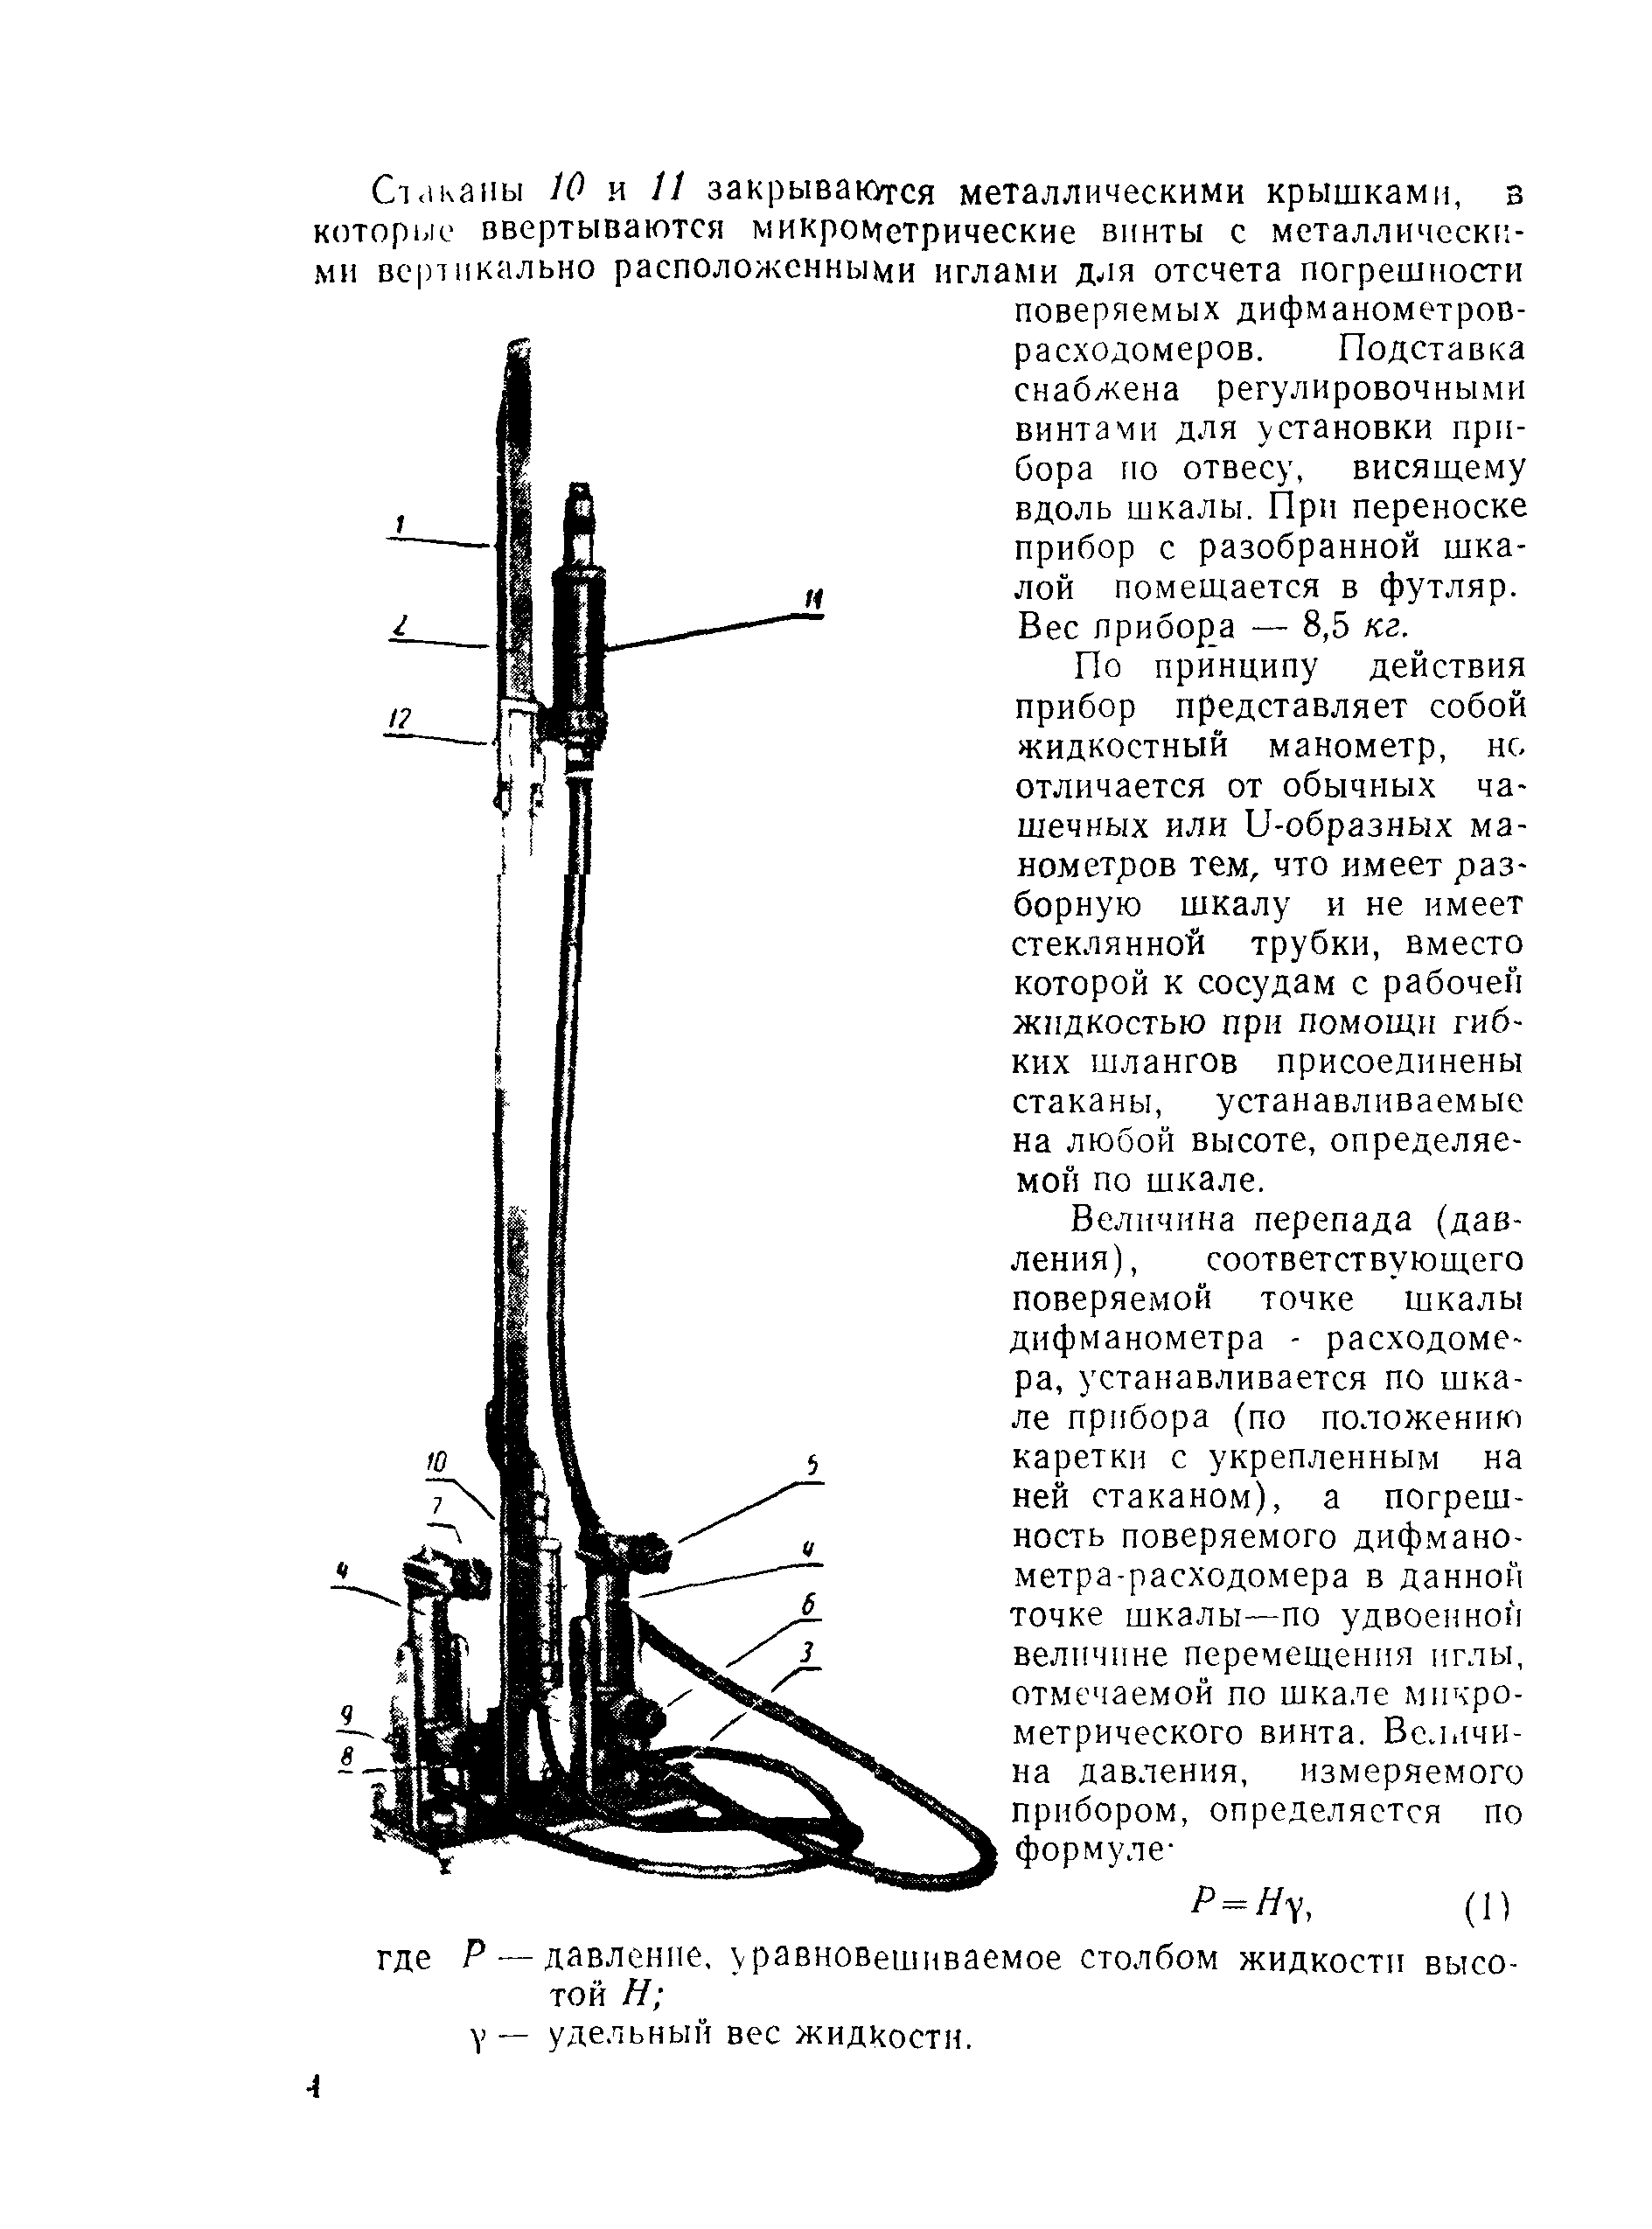 МИ 147-67